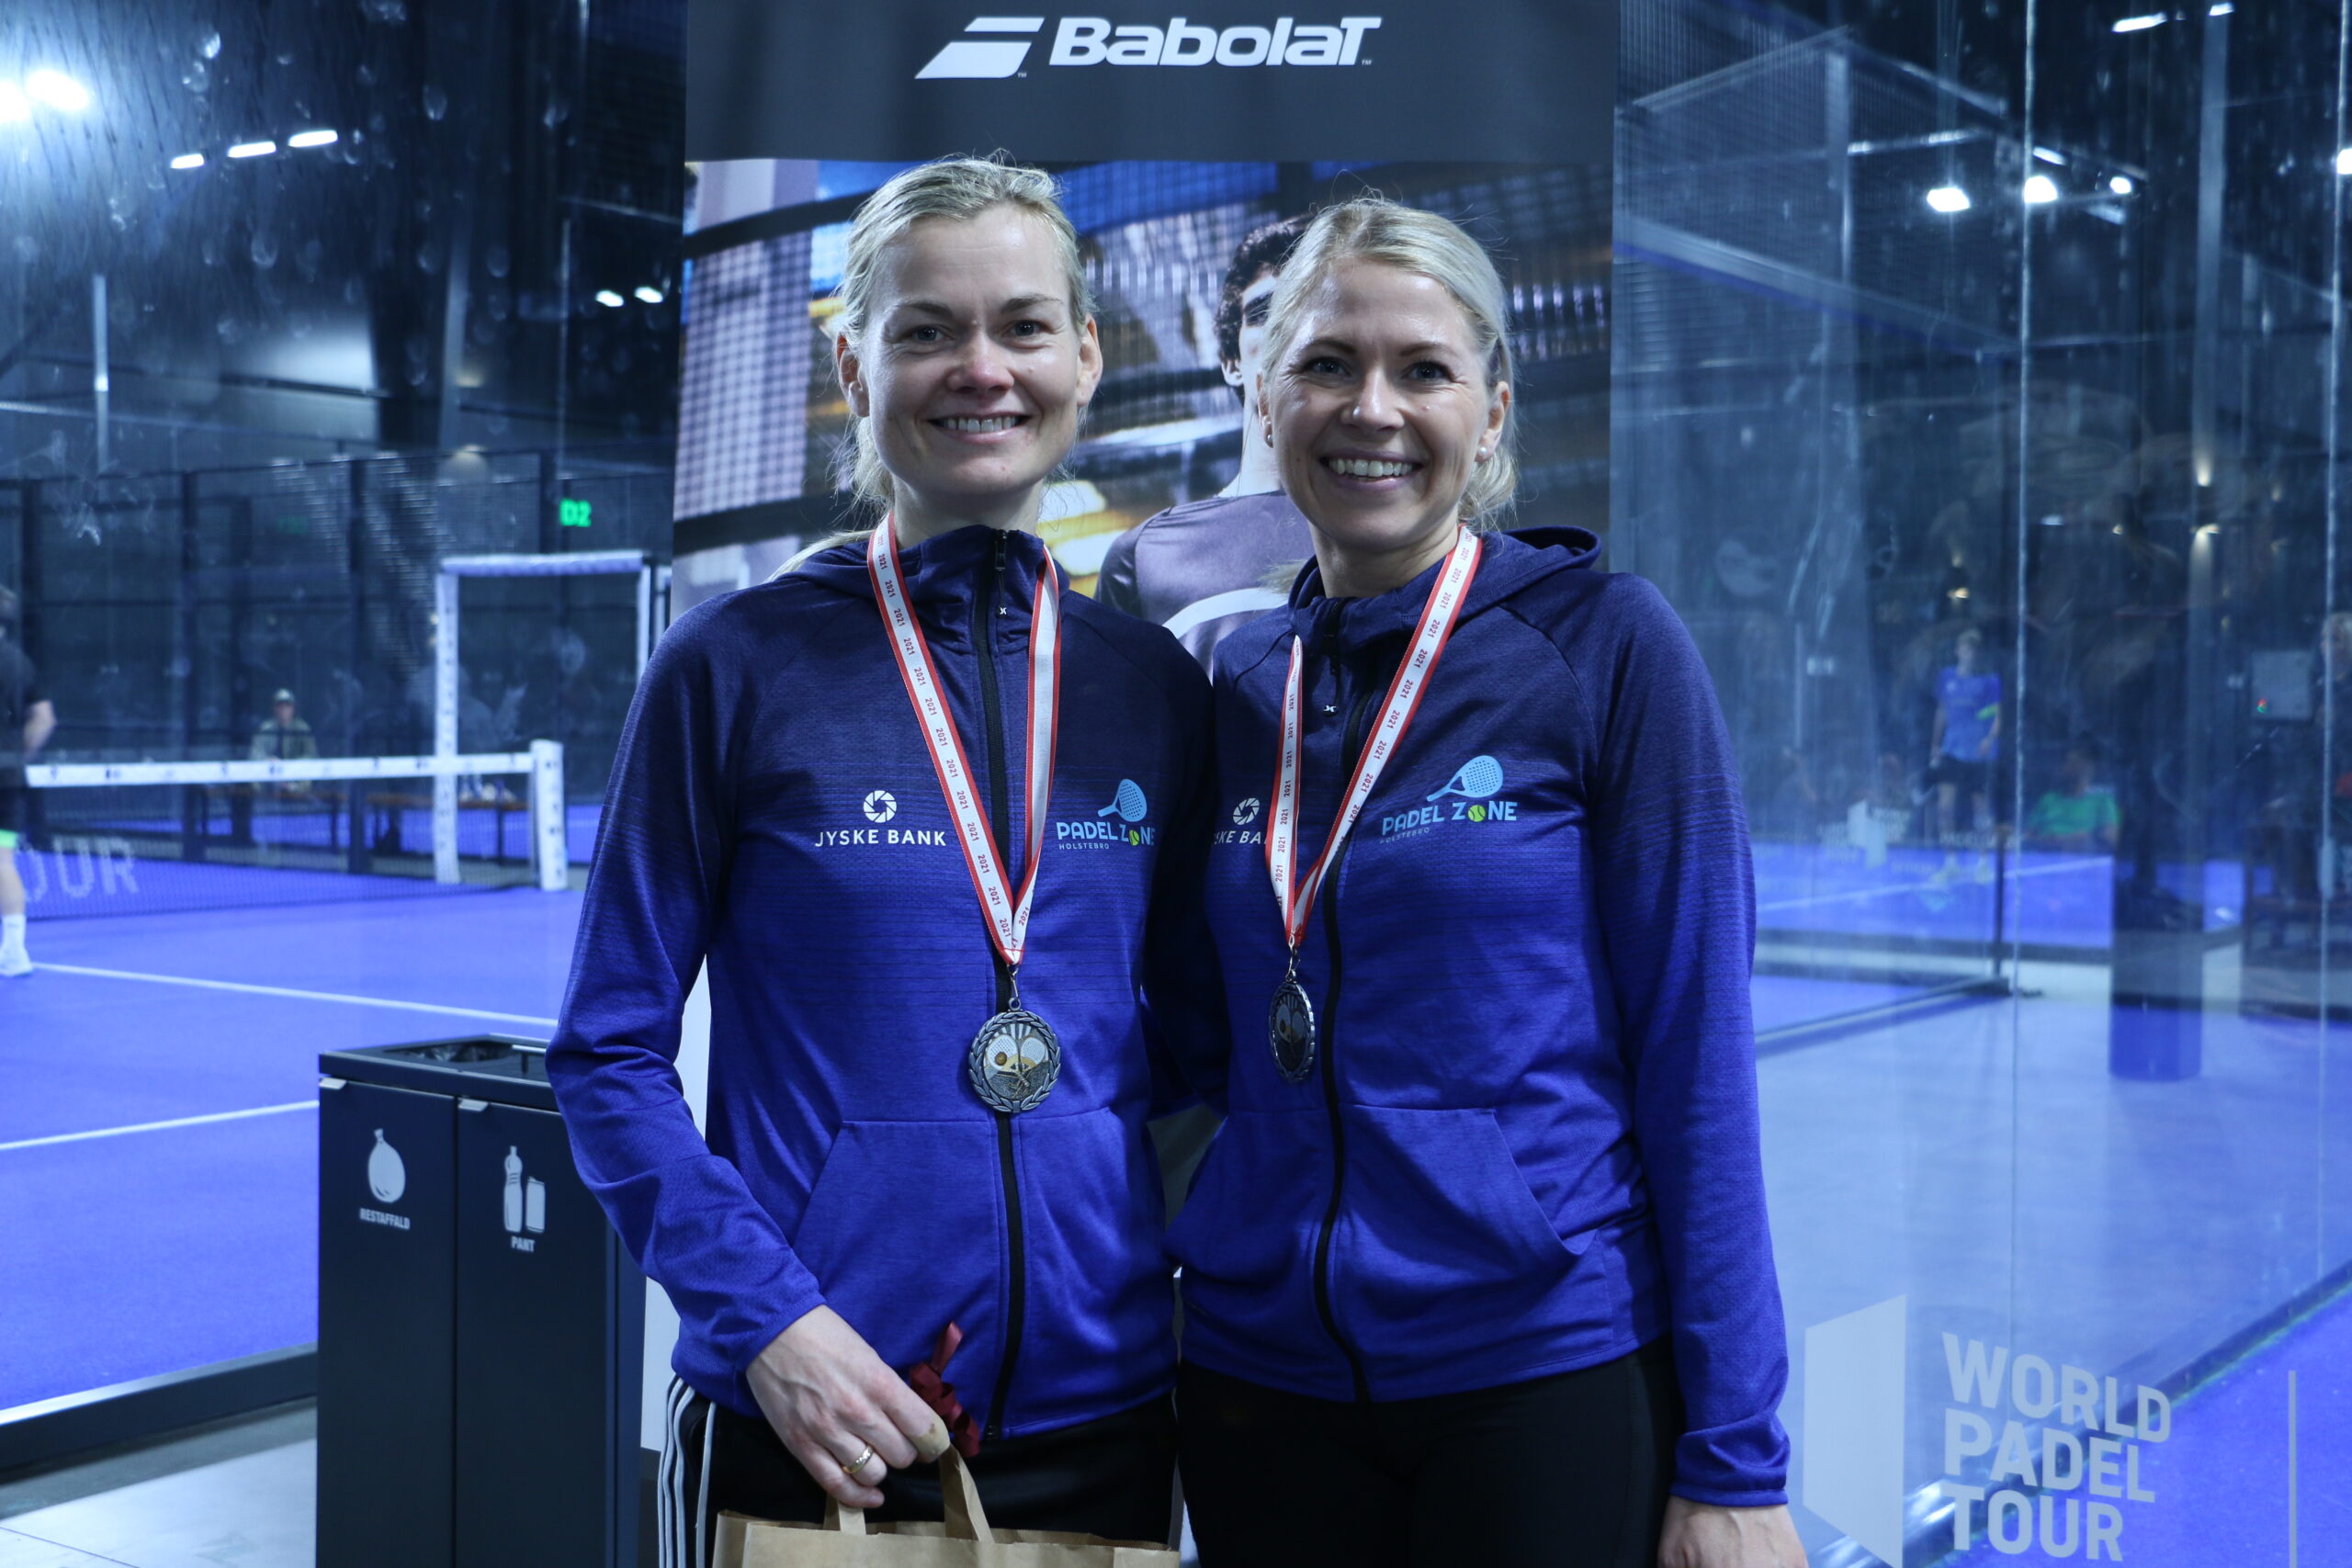 Carina Kastrup og Camilla Cavilla står smilende på billedet med deres sølvmedaljer rundt om halsen